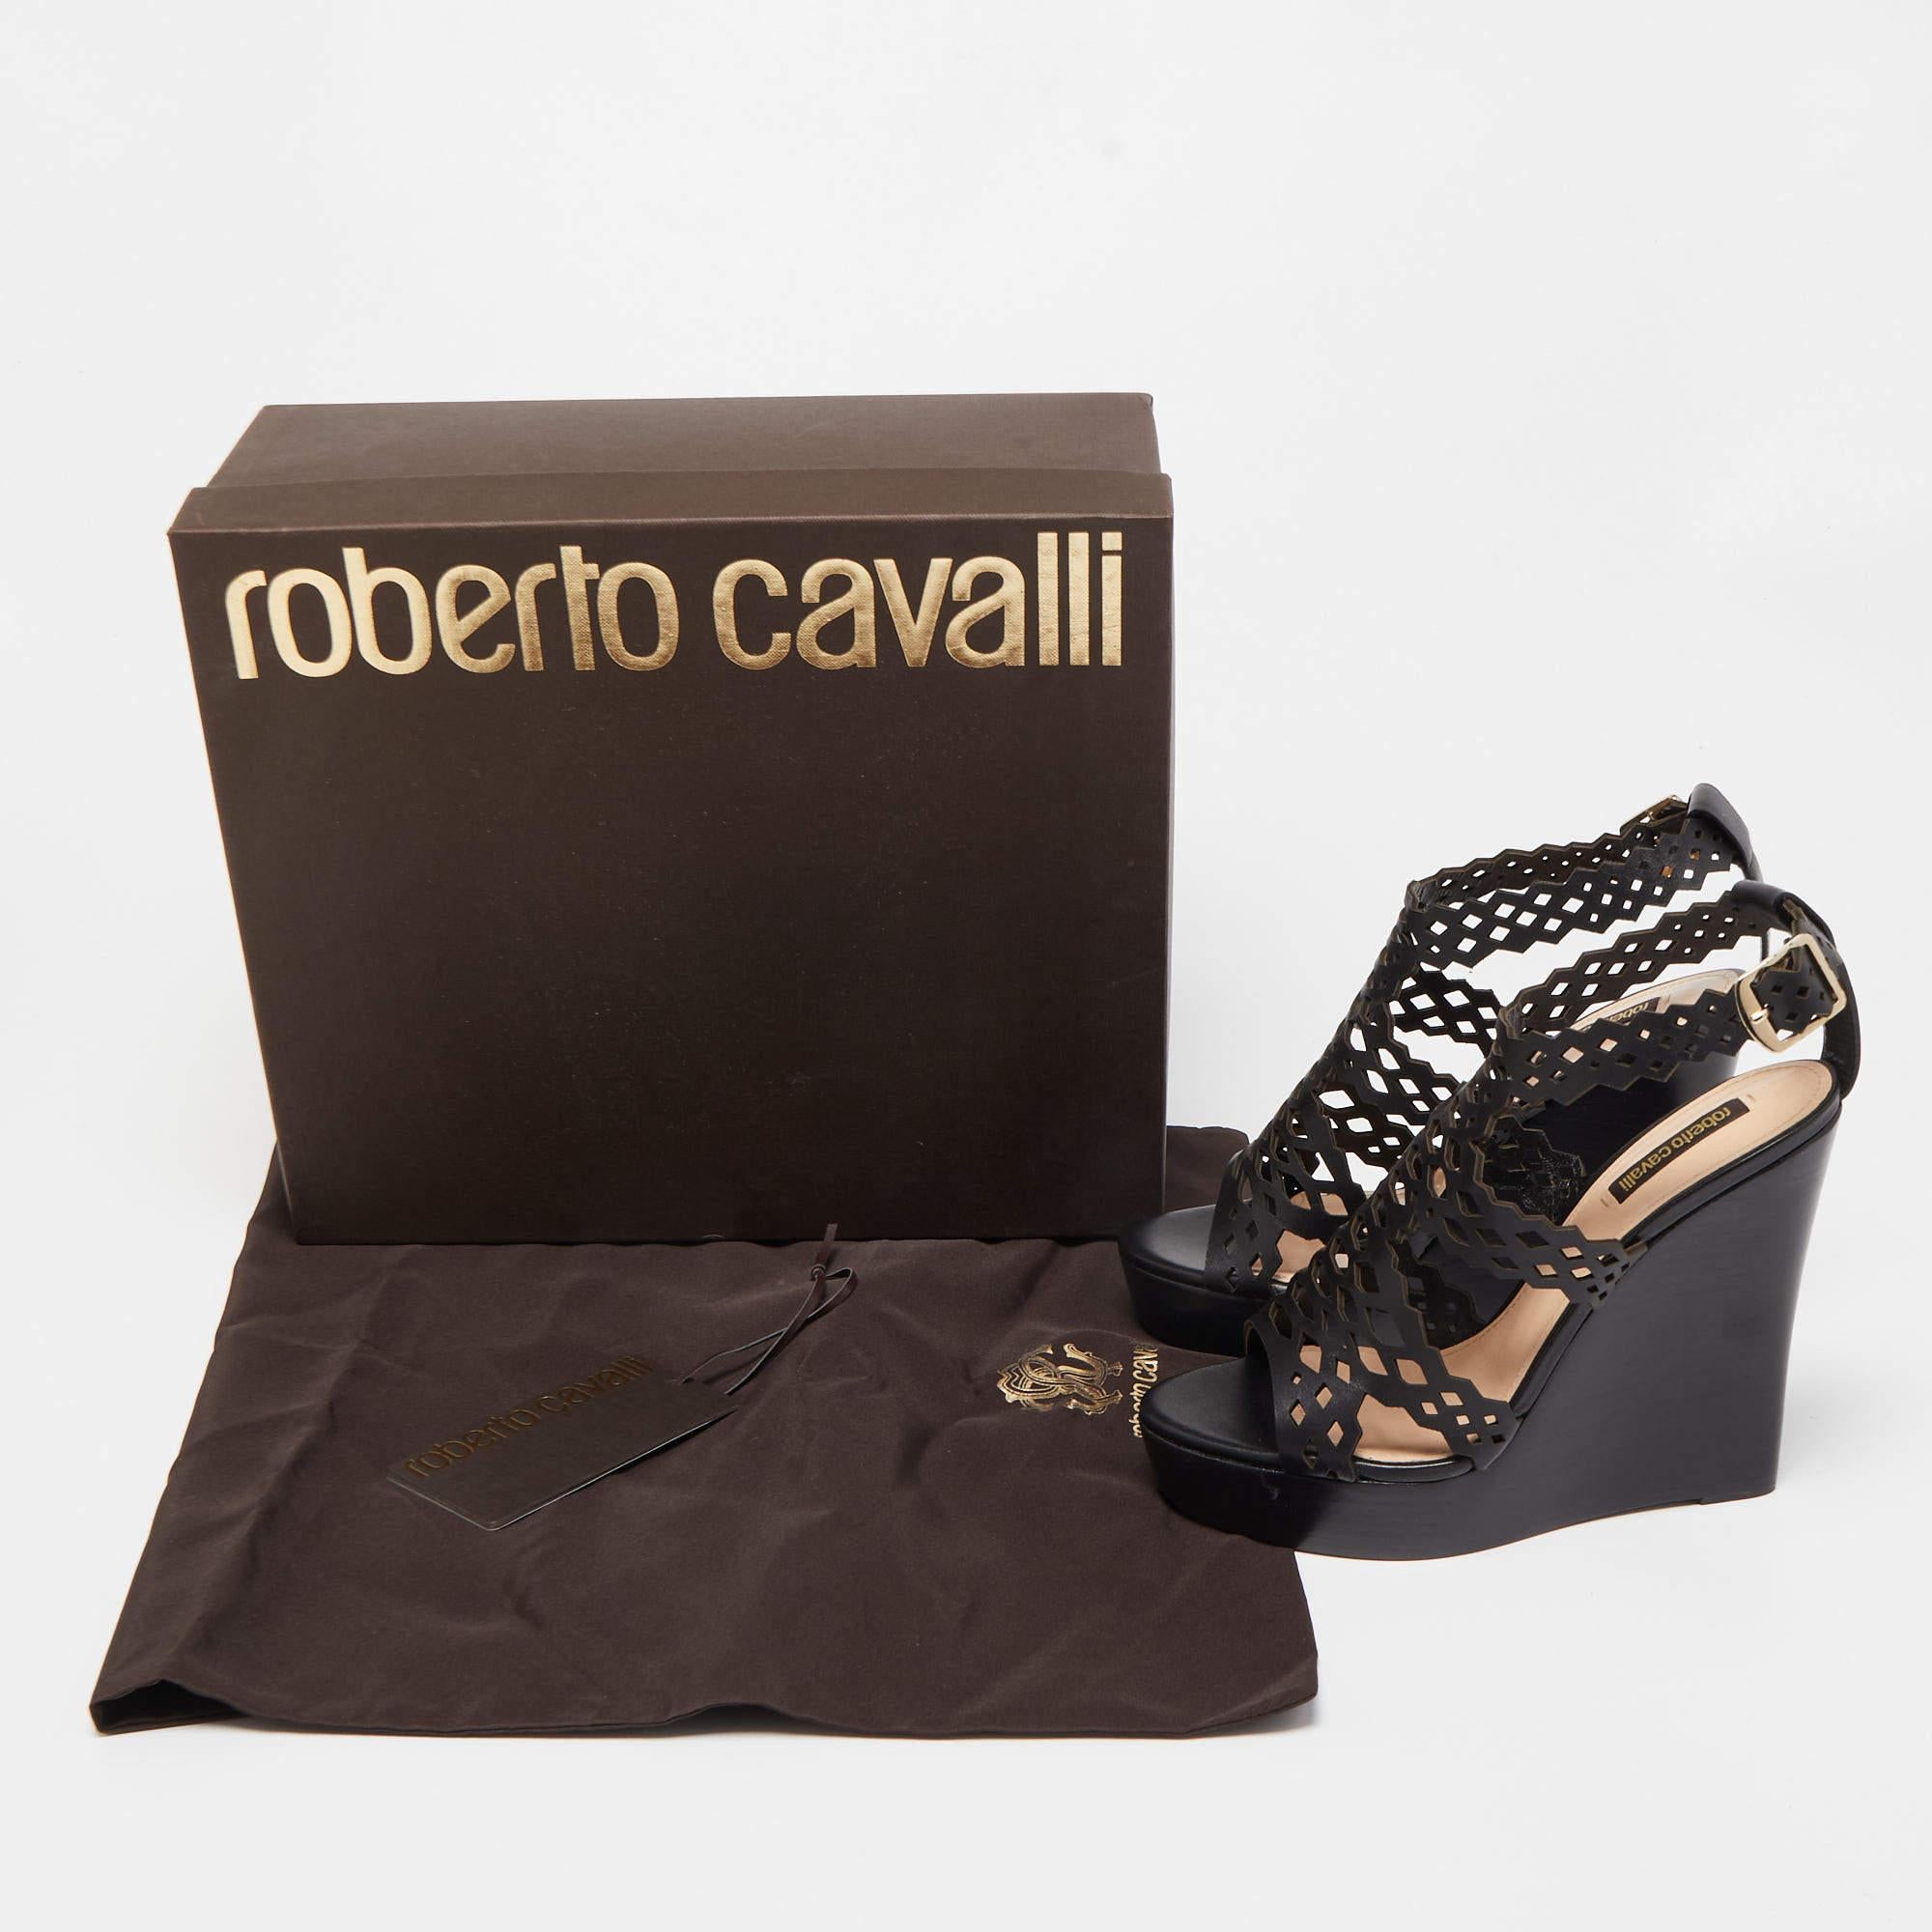 Roberto Cavalli Black Laser Cut Leather Ankle Strap Wedge Sandals Size 37 3